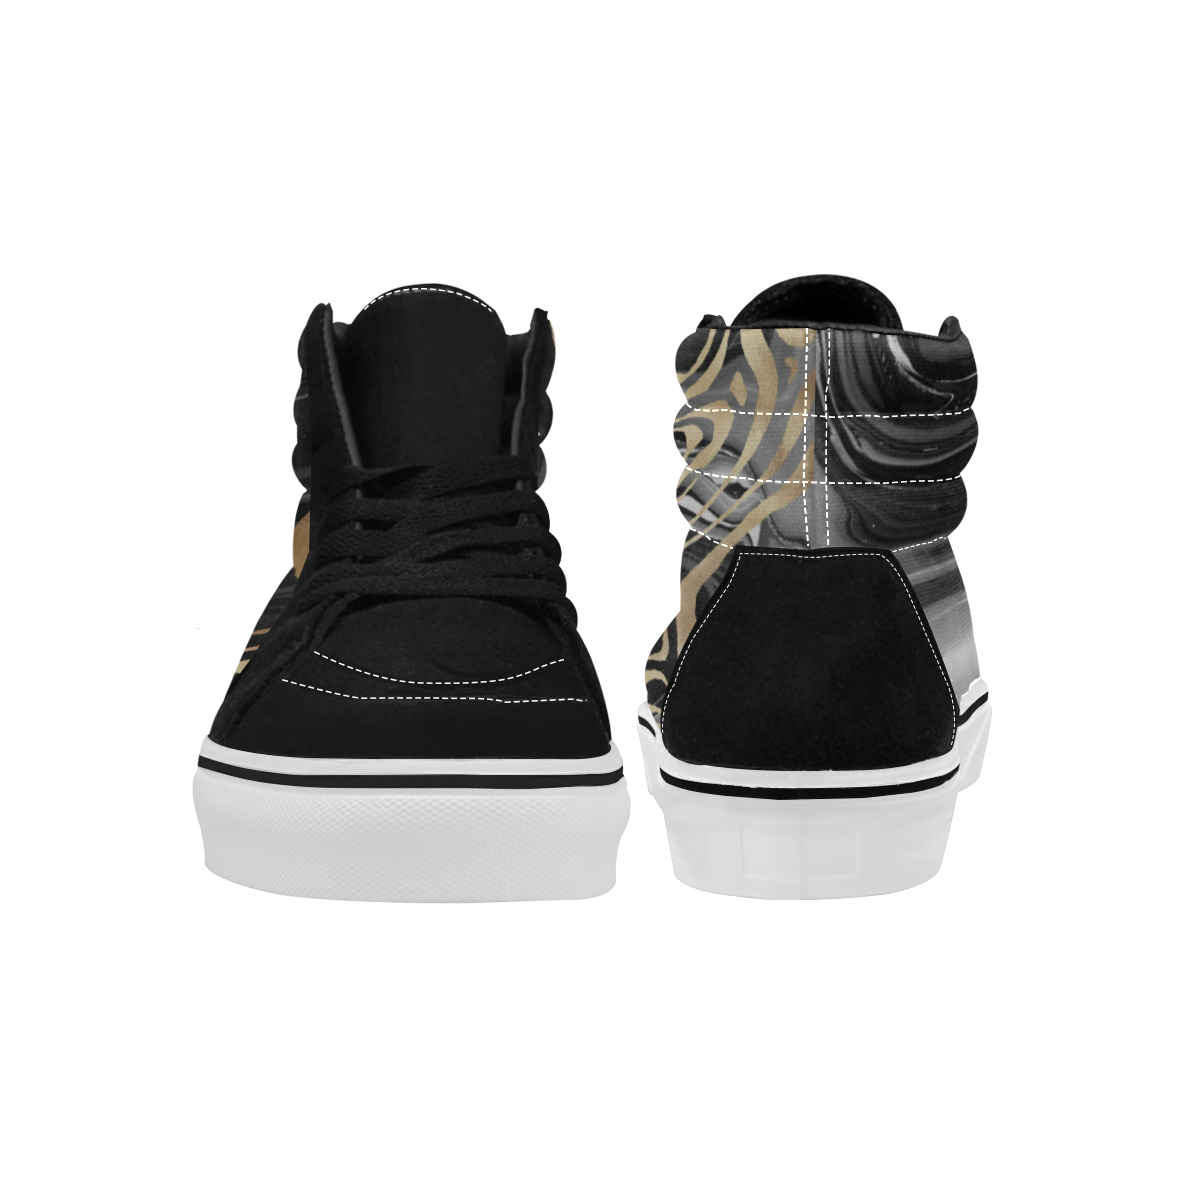 Design shoes black -- gold Women's High Top Skateboarding Shoes (Model E001-1)